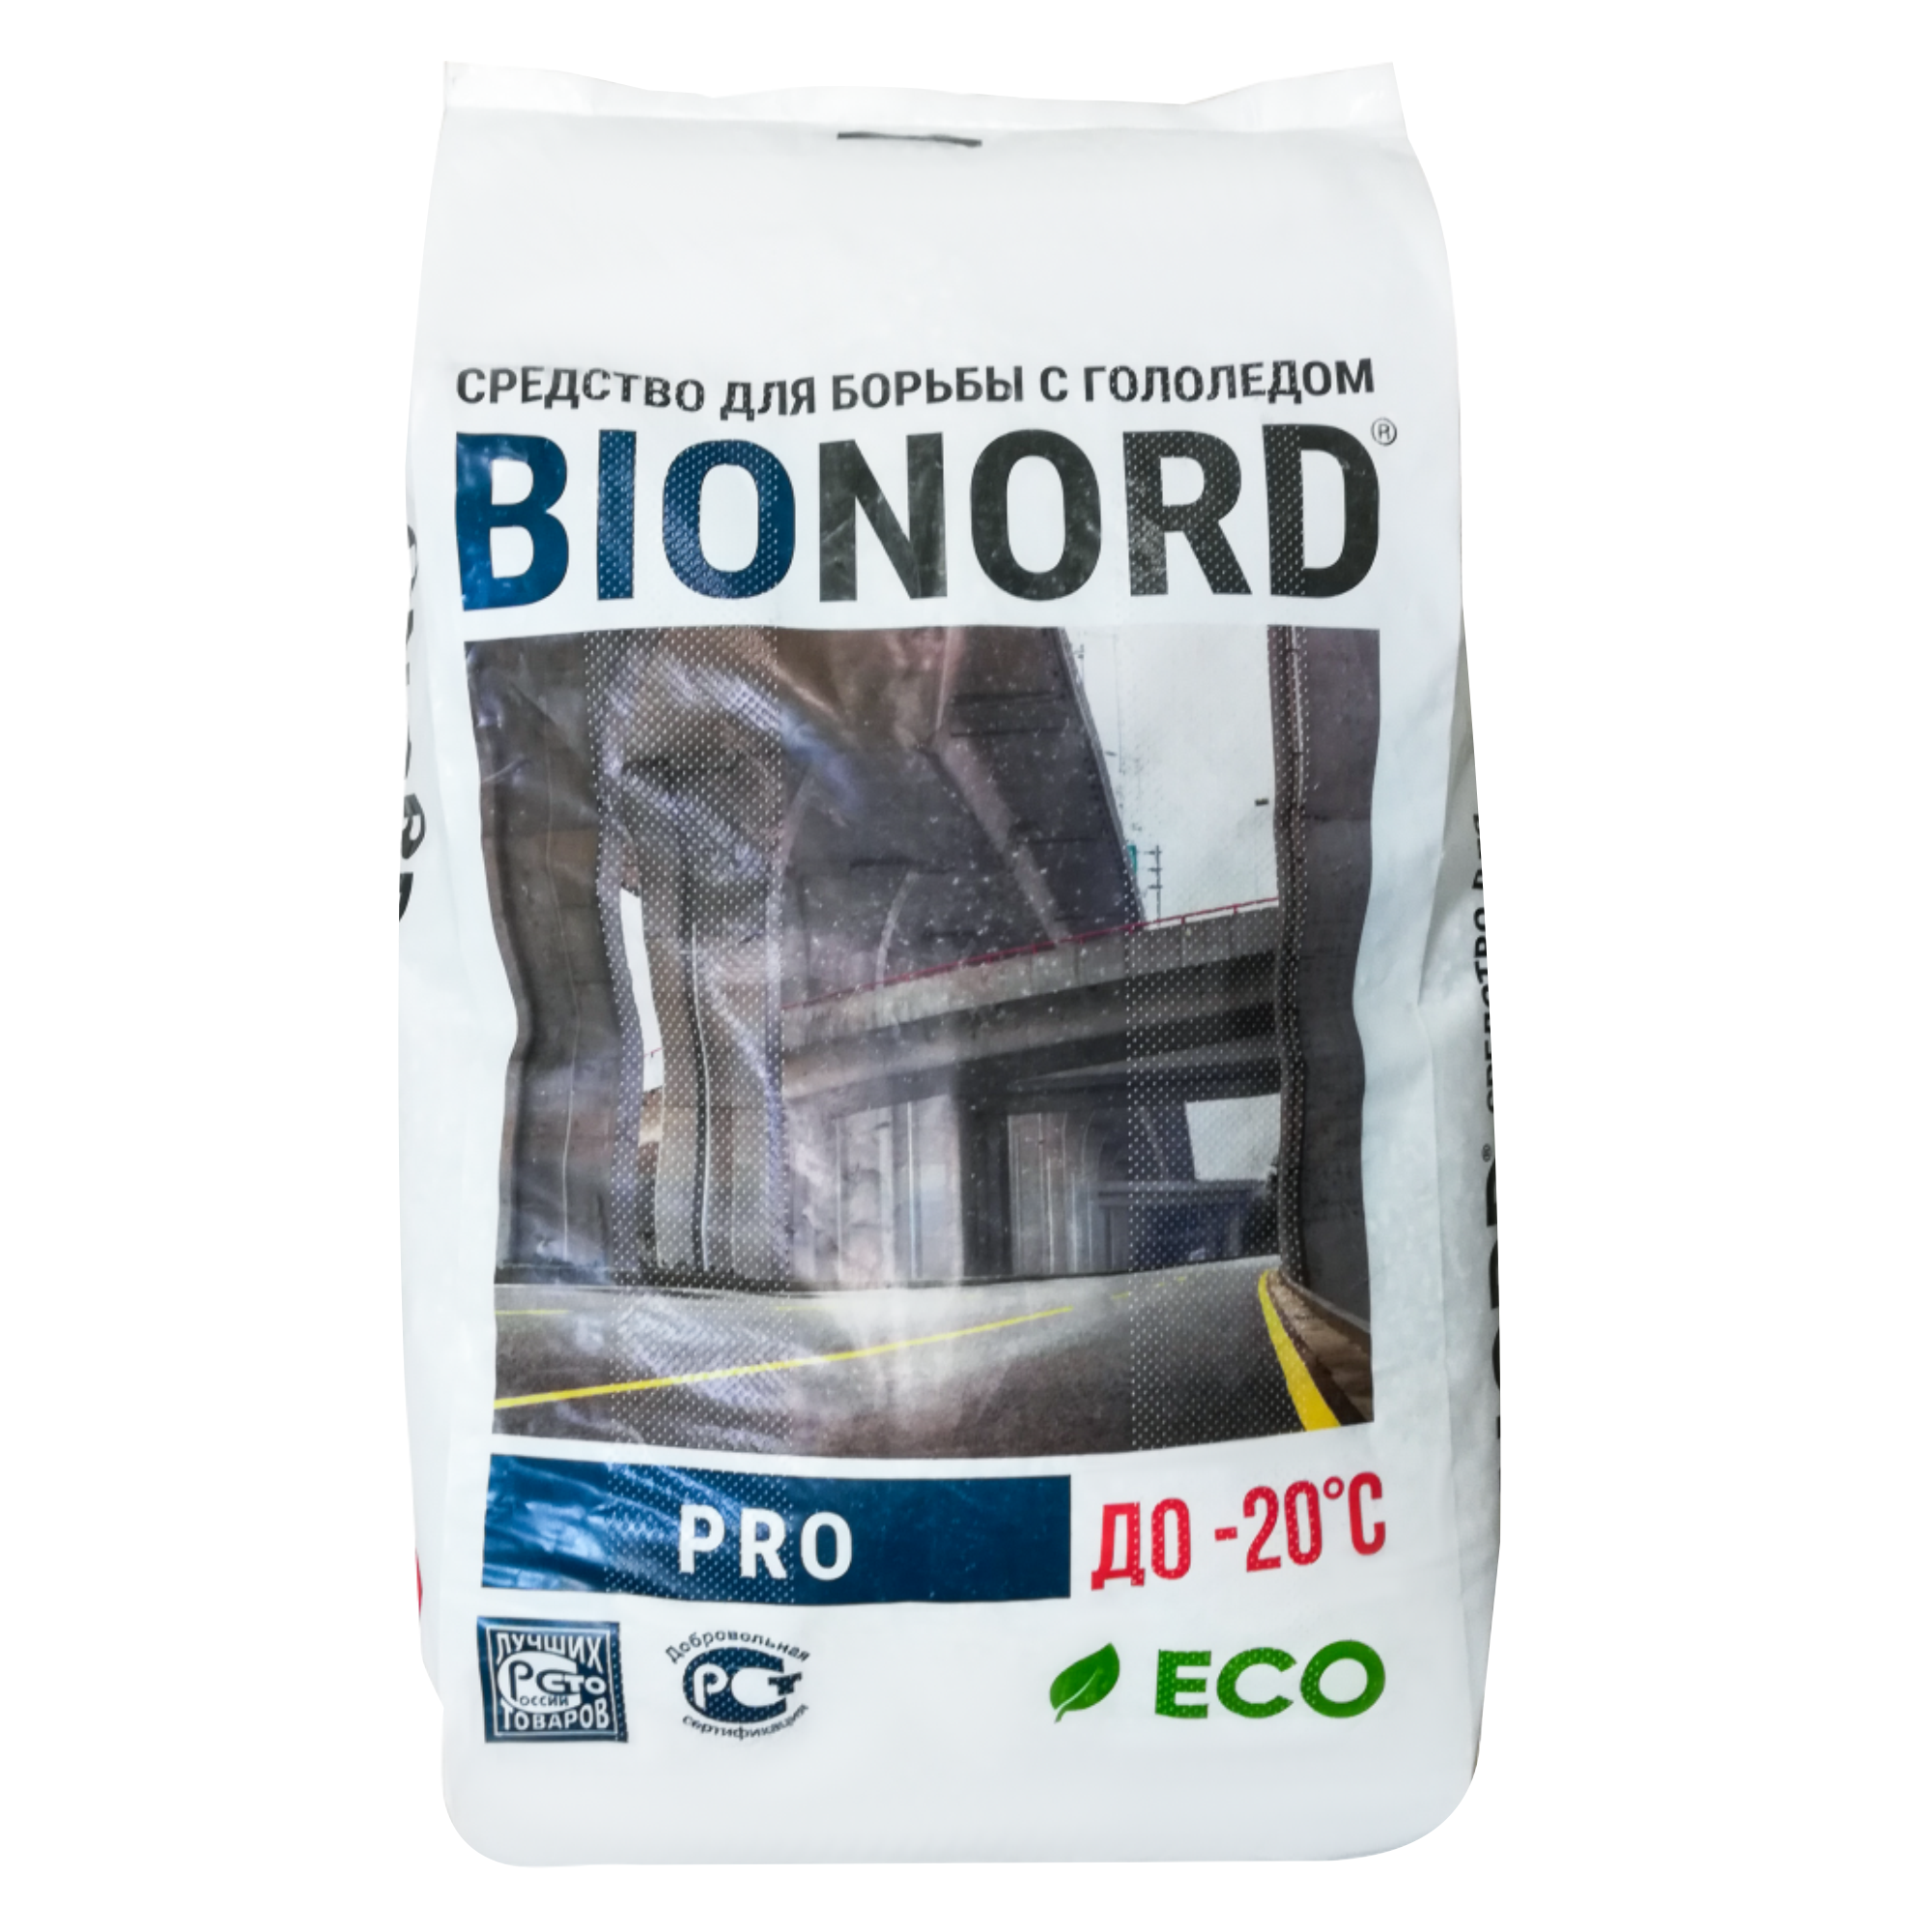 Реагент противогололедный BIONORD Про 23 кг реагент фертика icecare green до 20c 10кг